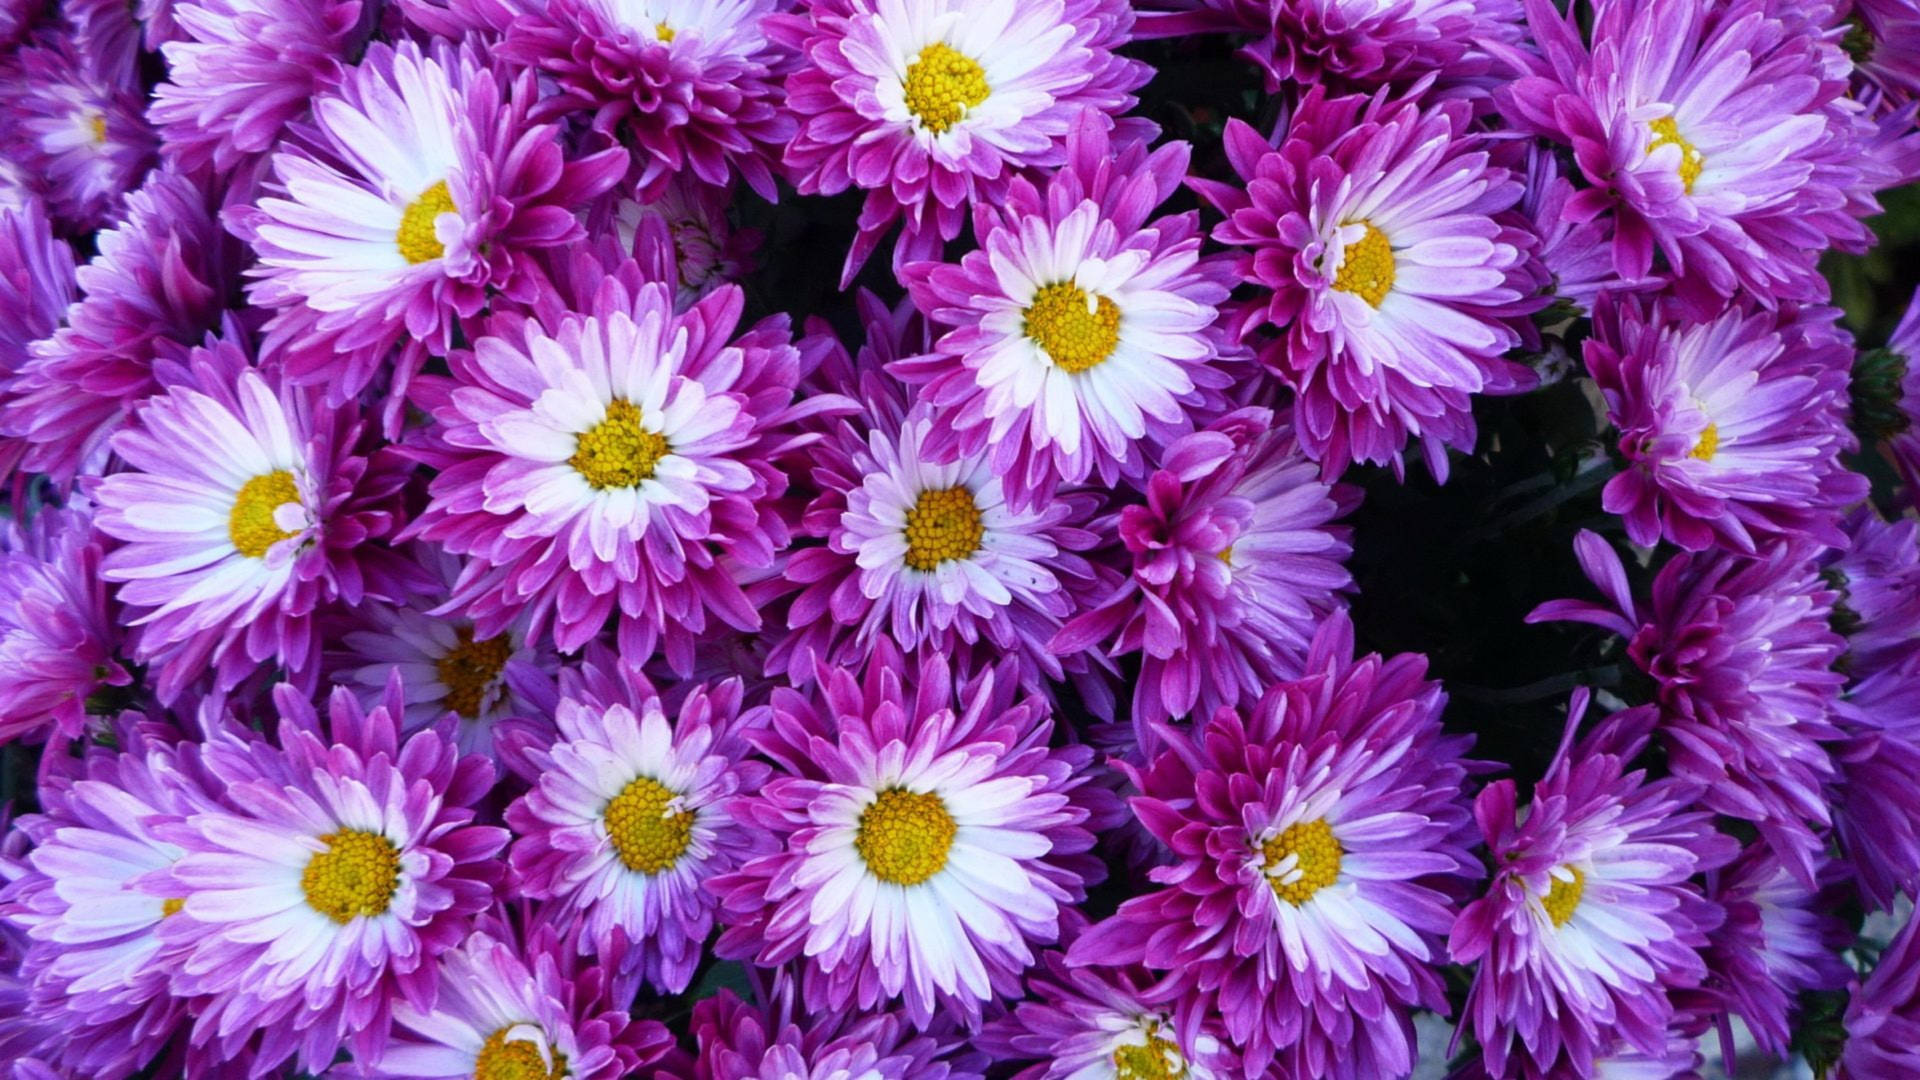 Download Purple White Chrysanthemum Flowers Wallpaper | Wallpapers.com